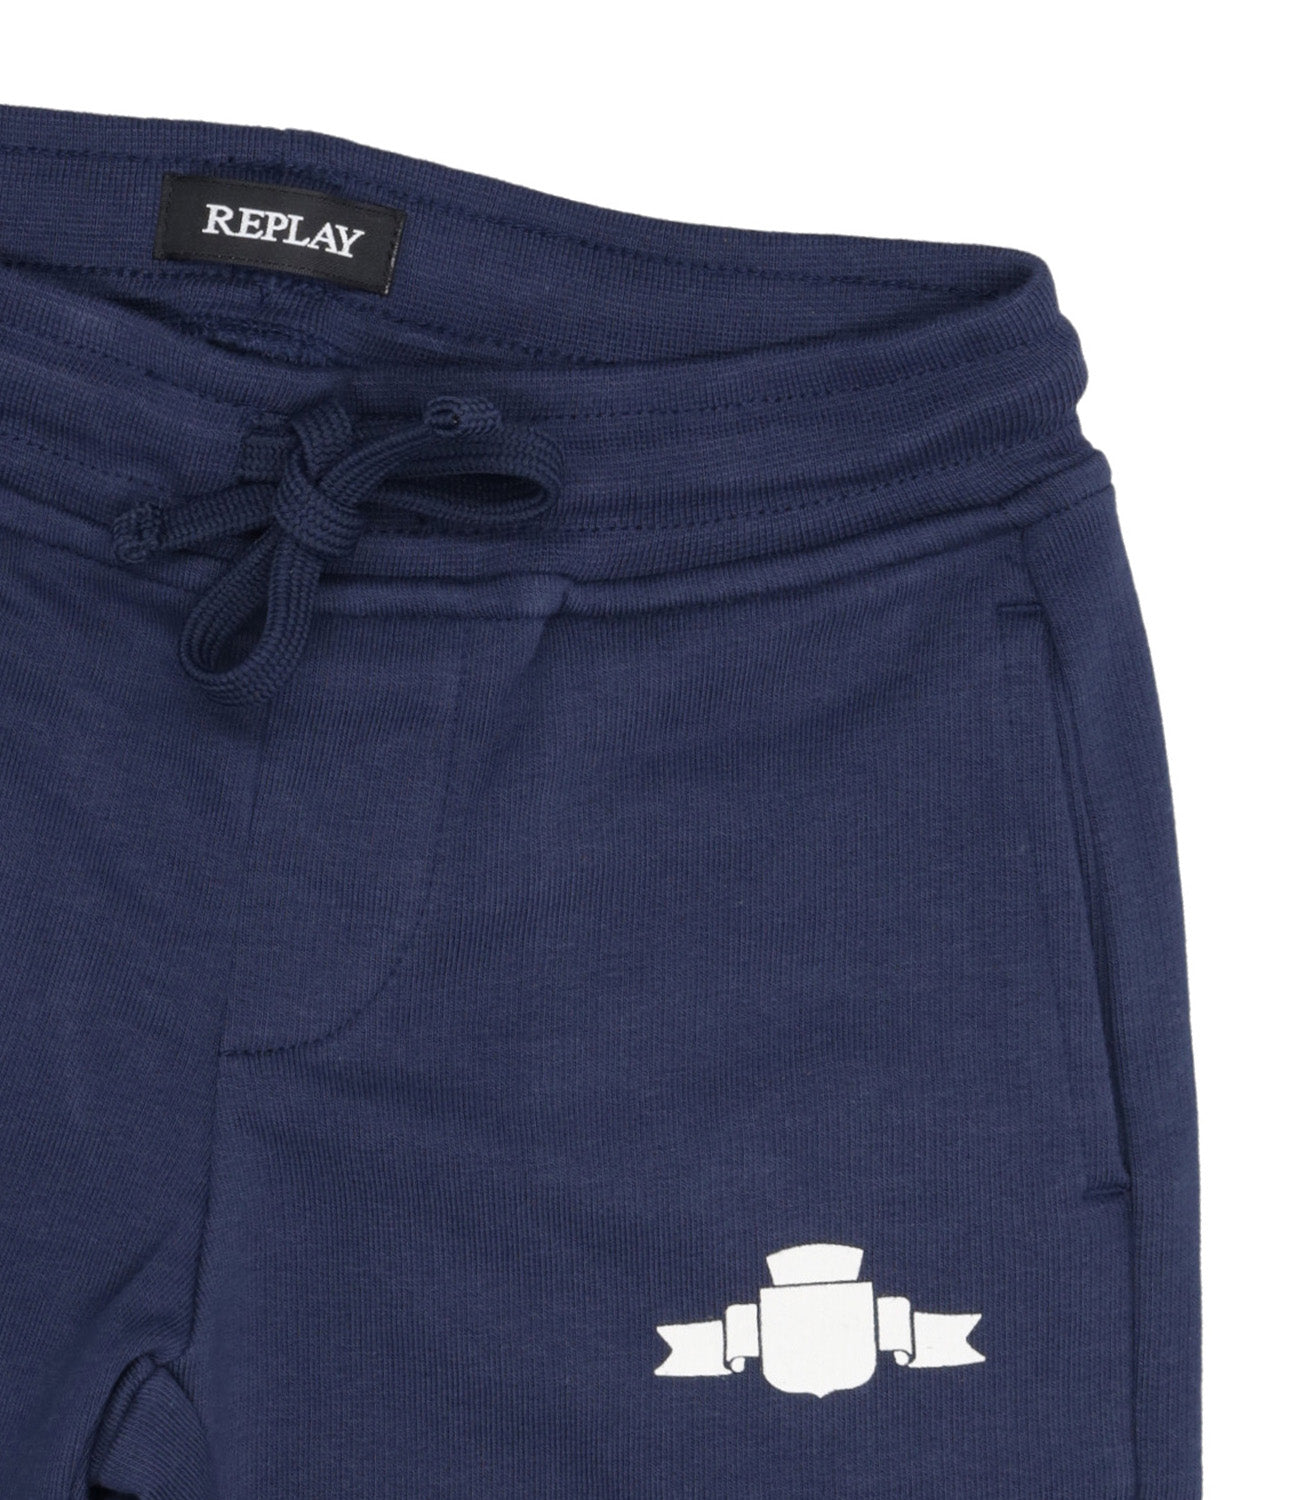 Replay & Sons Junior | Navy Blue Bermuda Shorts